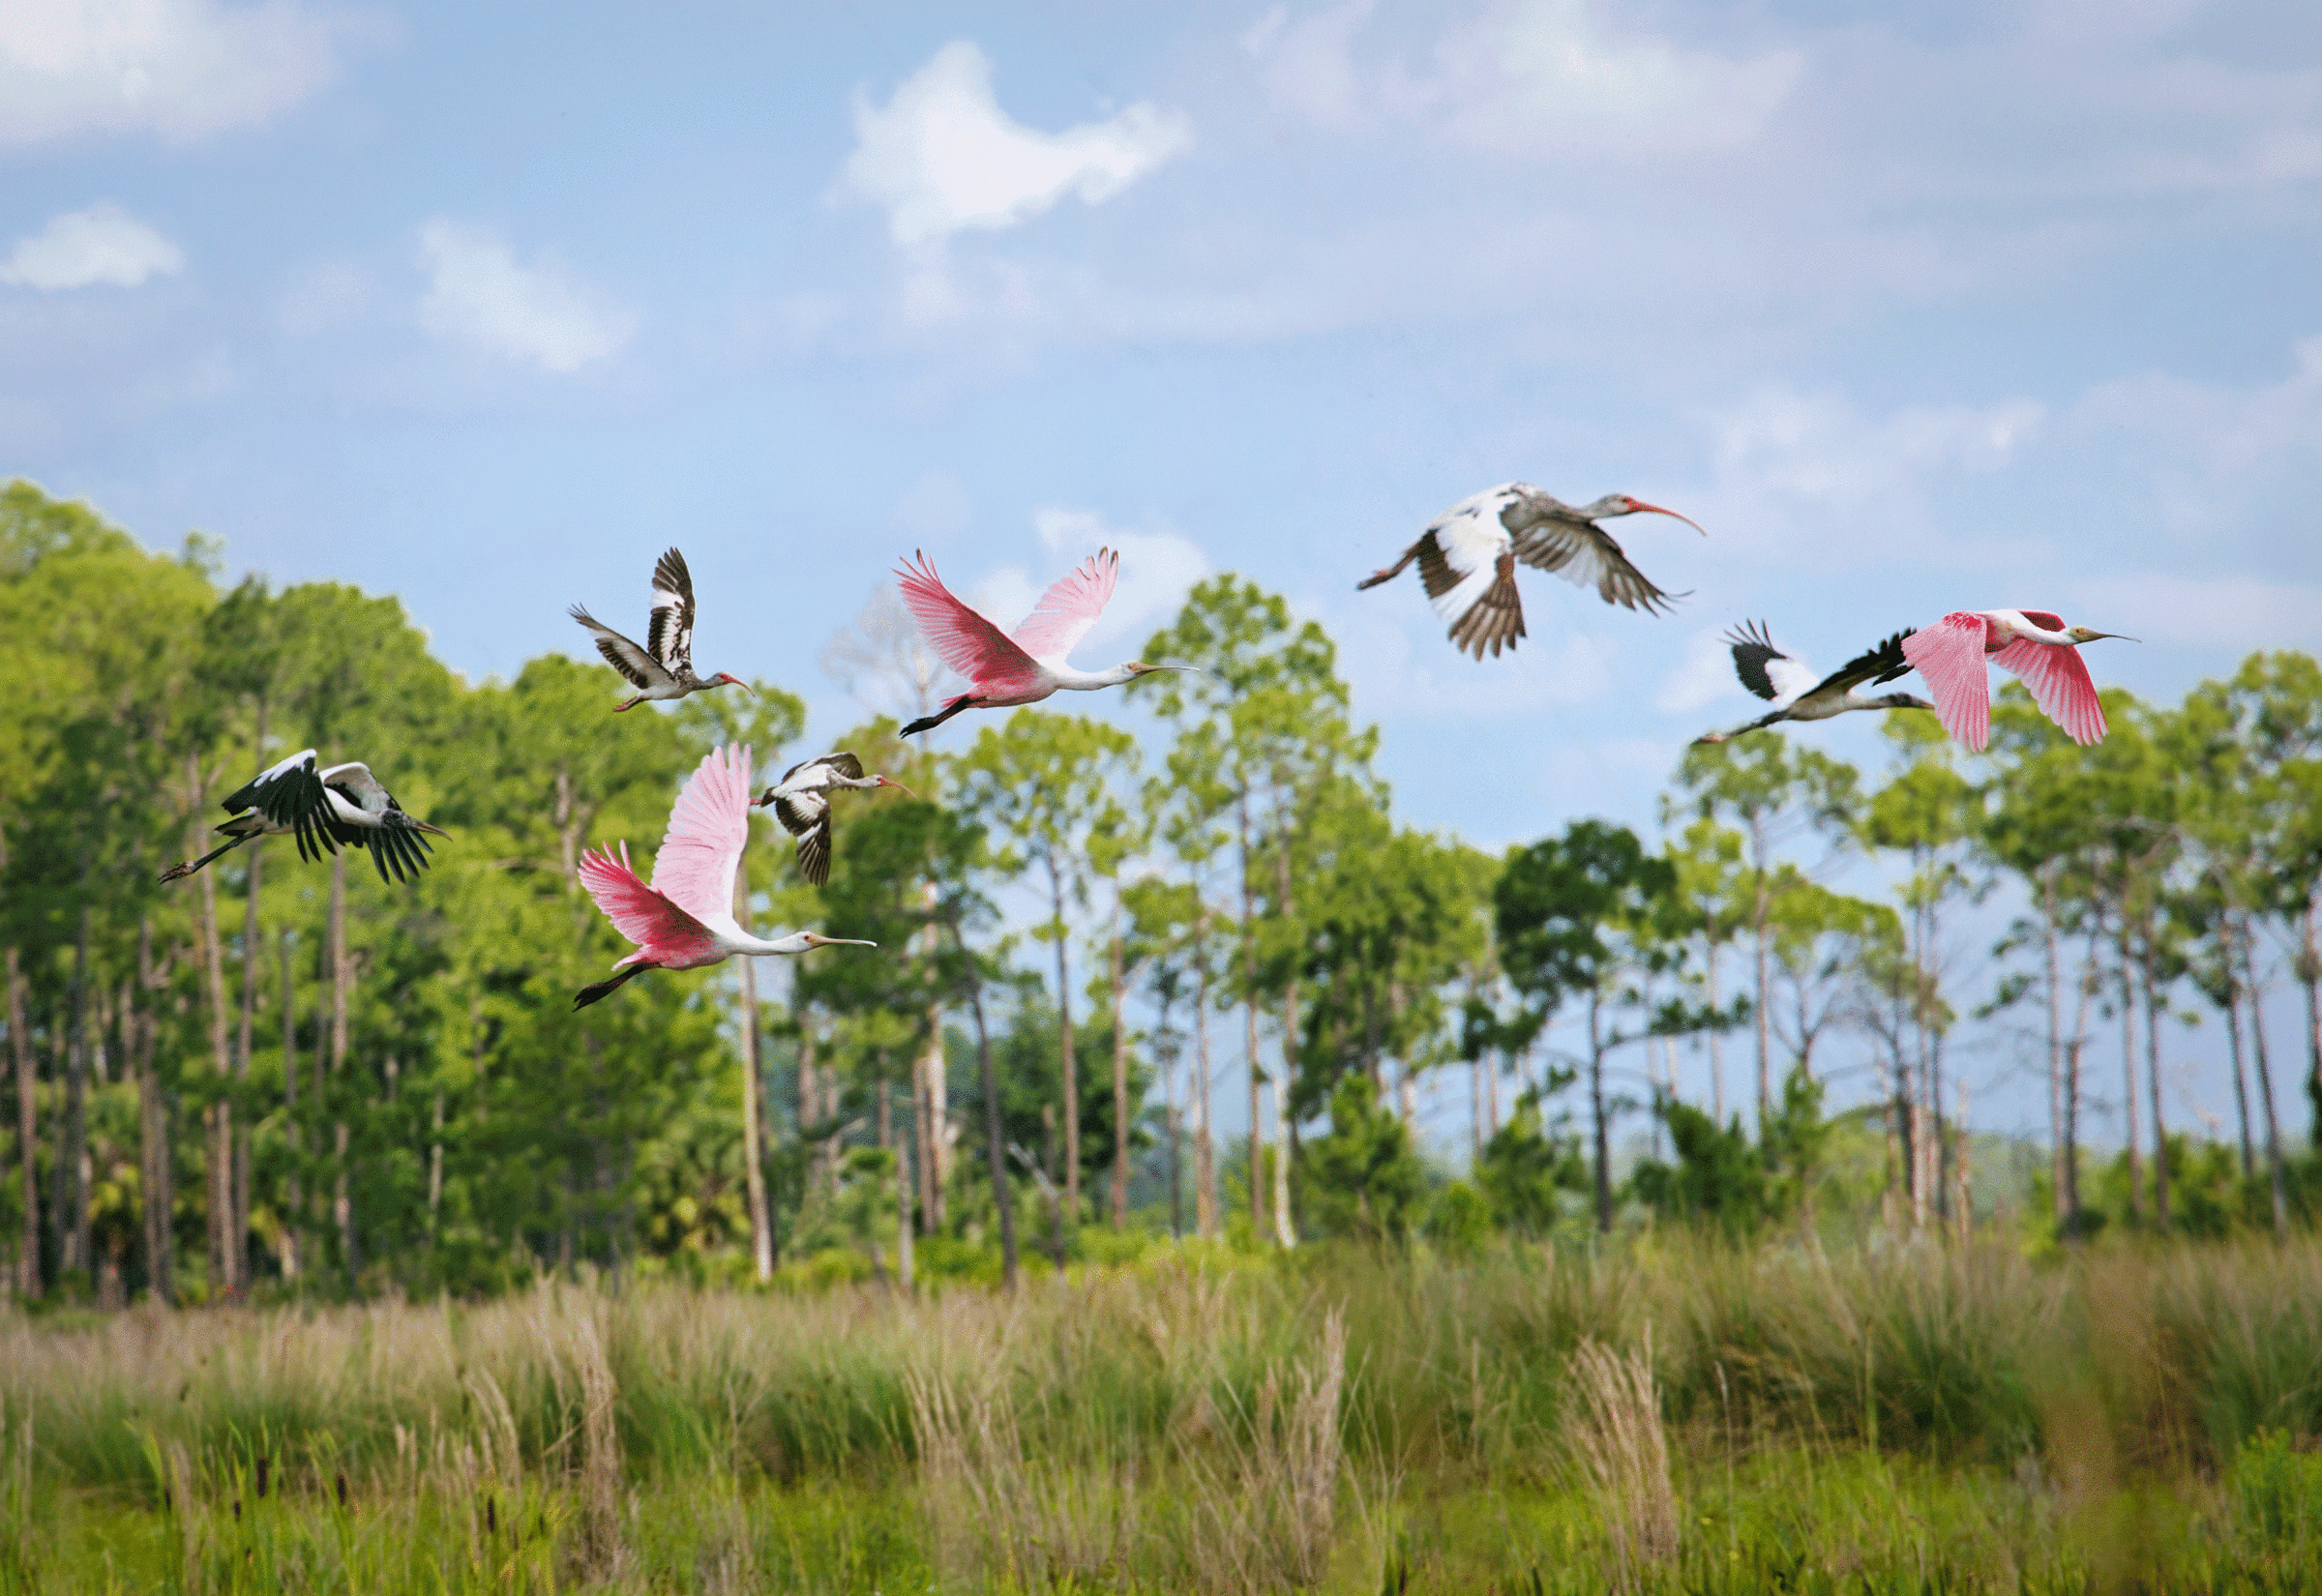 Wading birds in a wetland